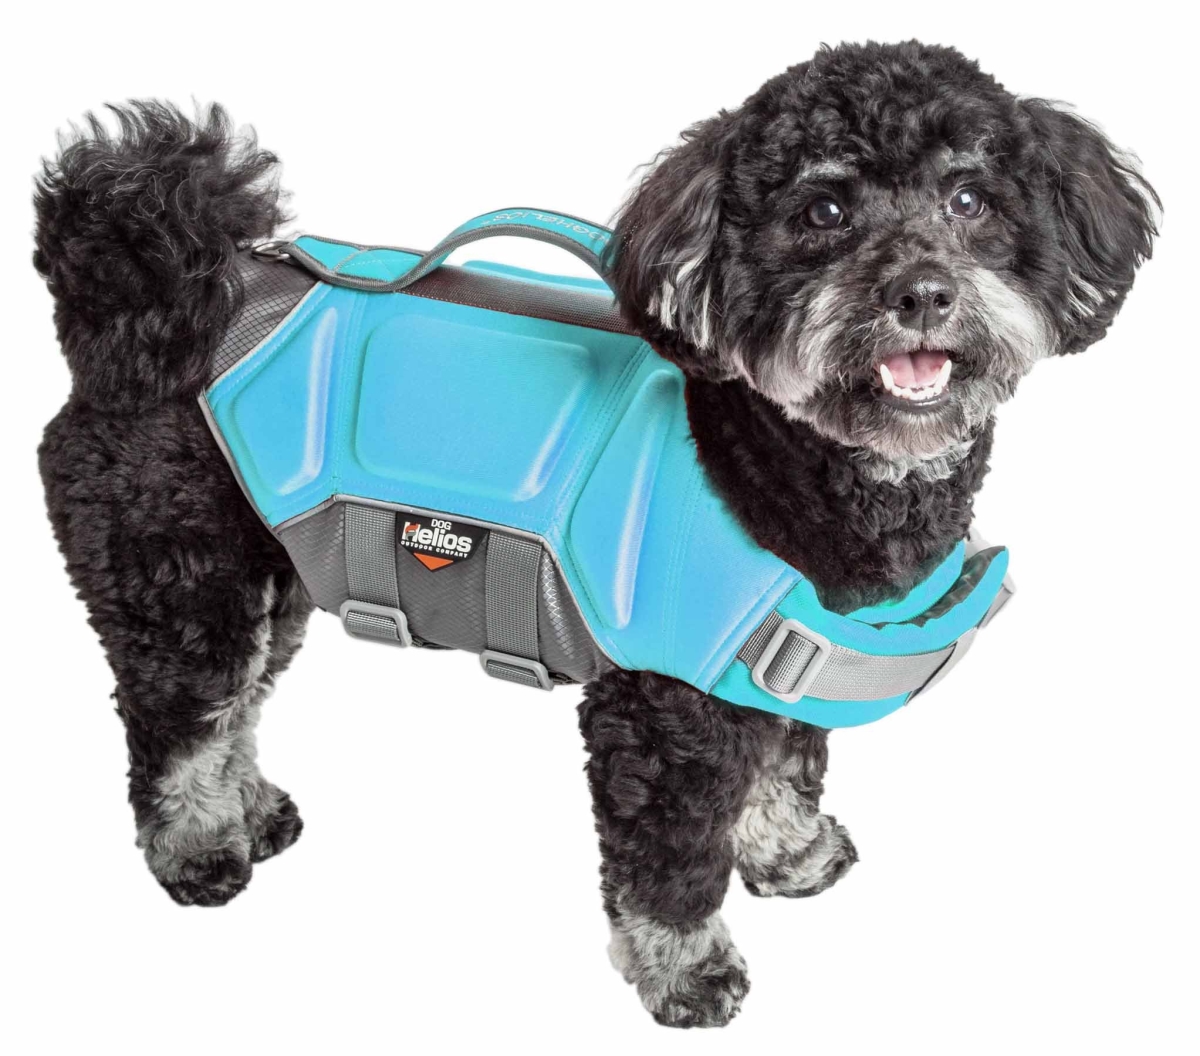 Ha18lbmd Tidal Guard Multi-point Strategically-stitched Reflective Pet Dog Life Jacket Vest - Light Blue, Medium